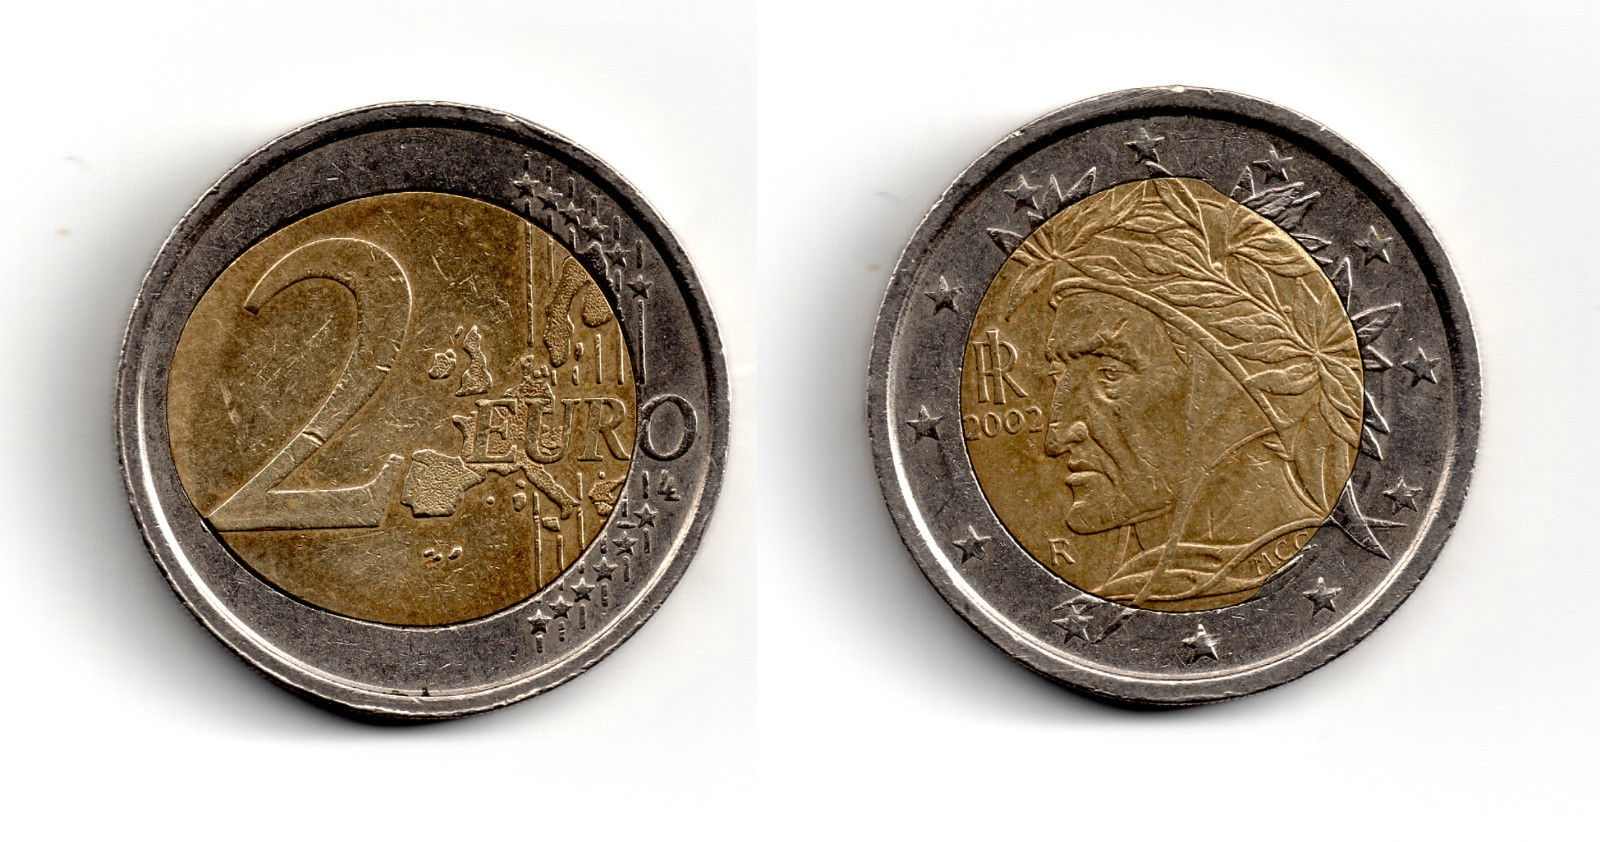 2€ Italie 2002 coeur déformé - Eurorare monnaies fautées ou euro rare